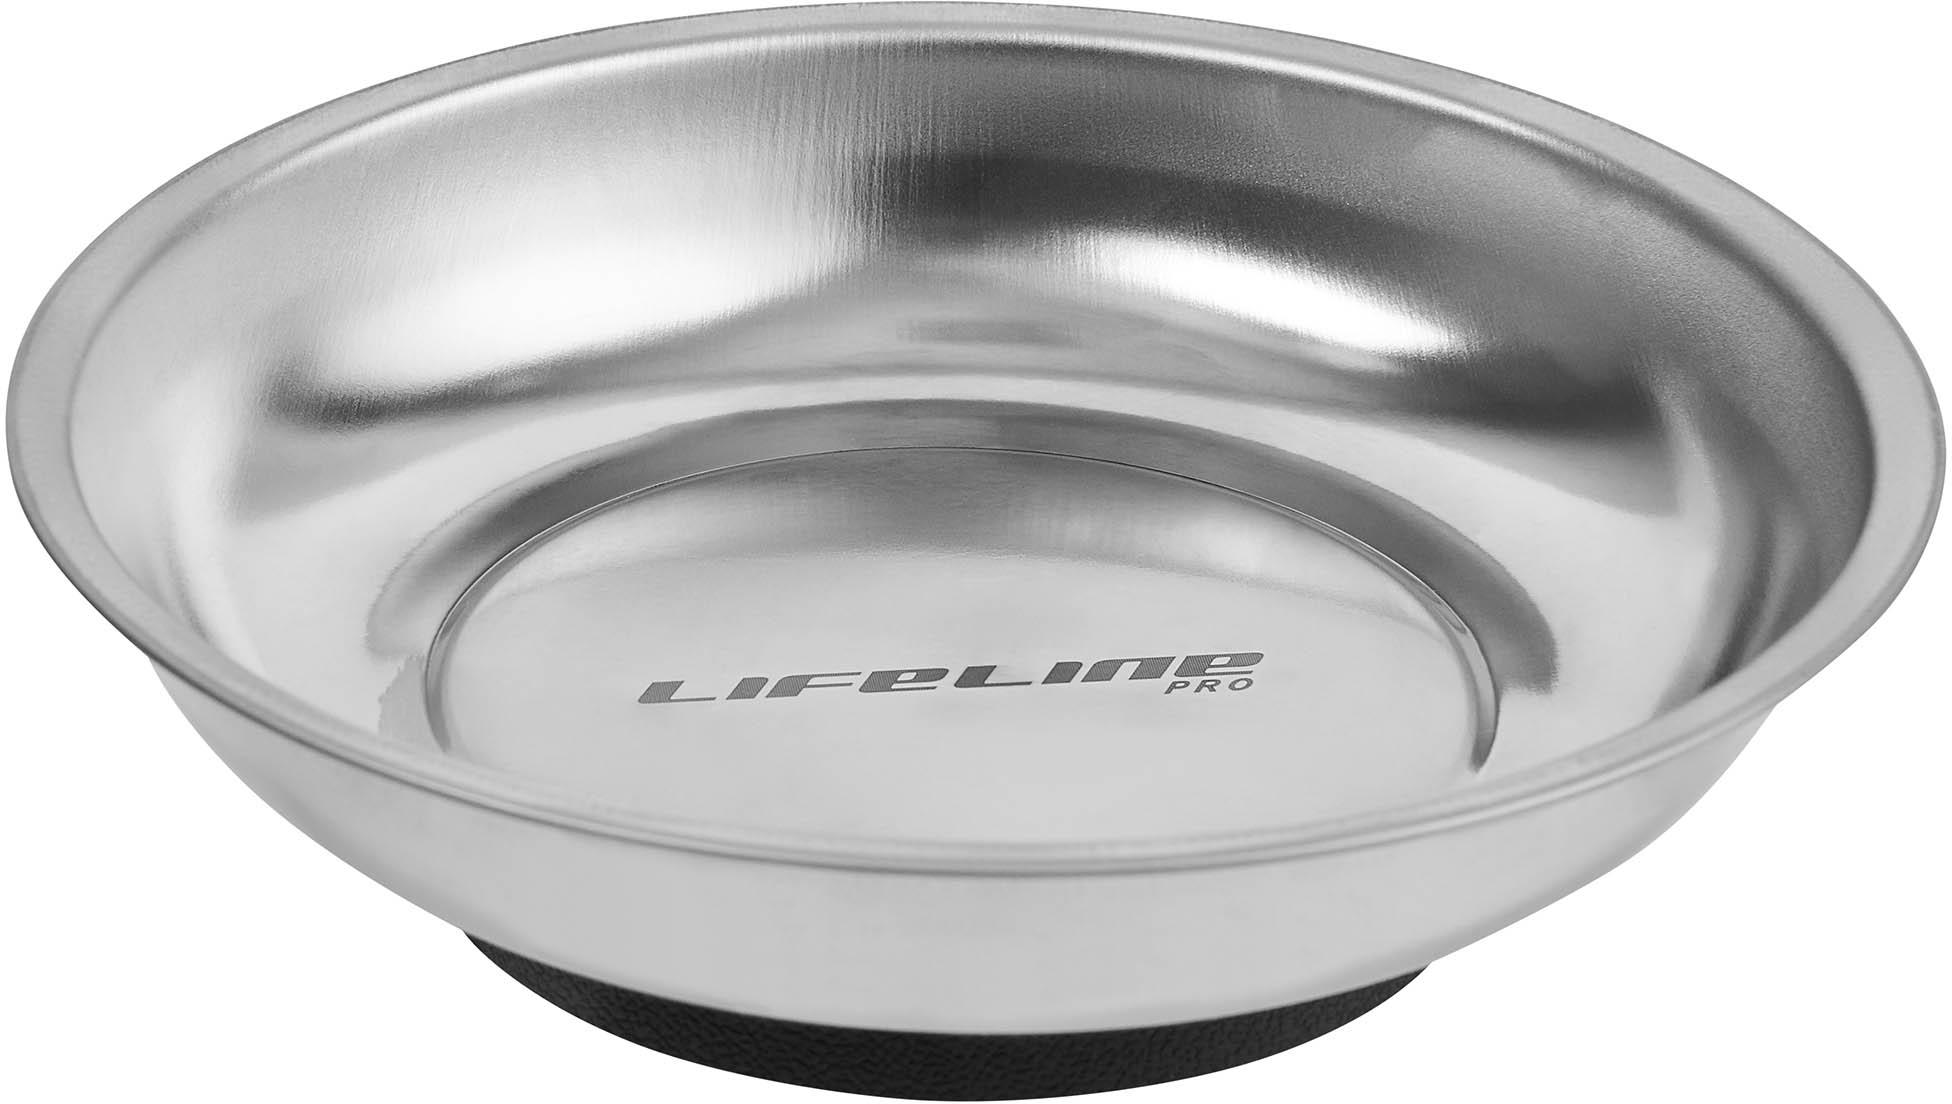 Lifeline Pro Magnetic Bowl - Silver